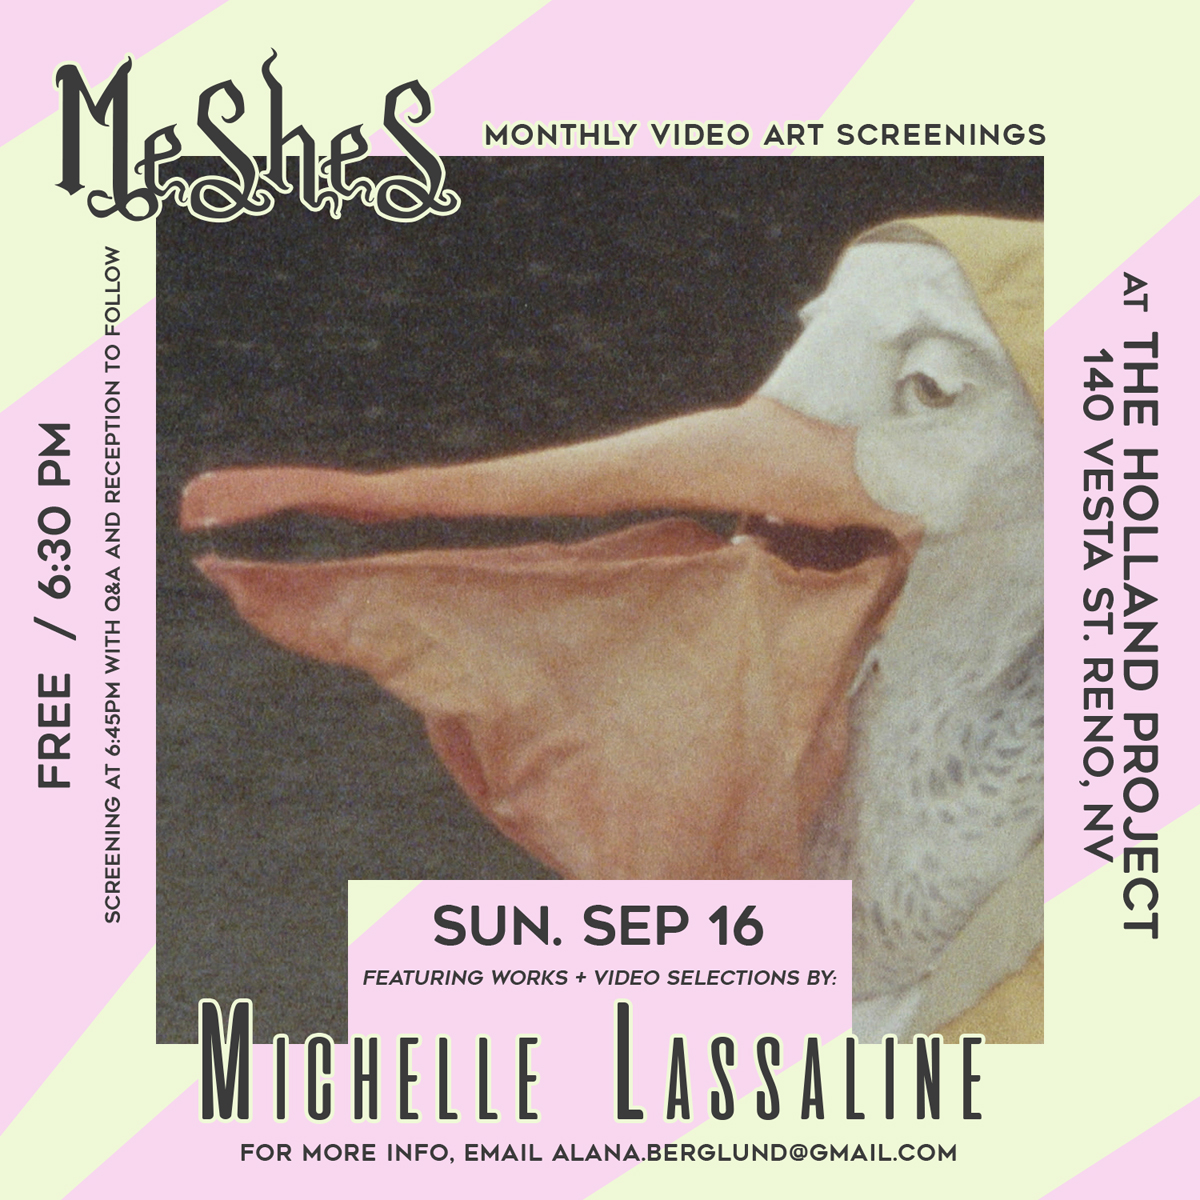 MESHES Video Art Club feat. Michelle Lassaline